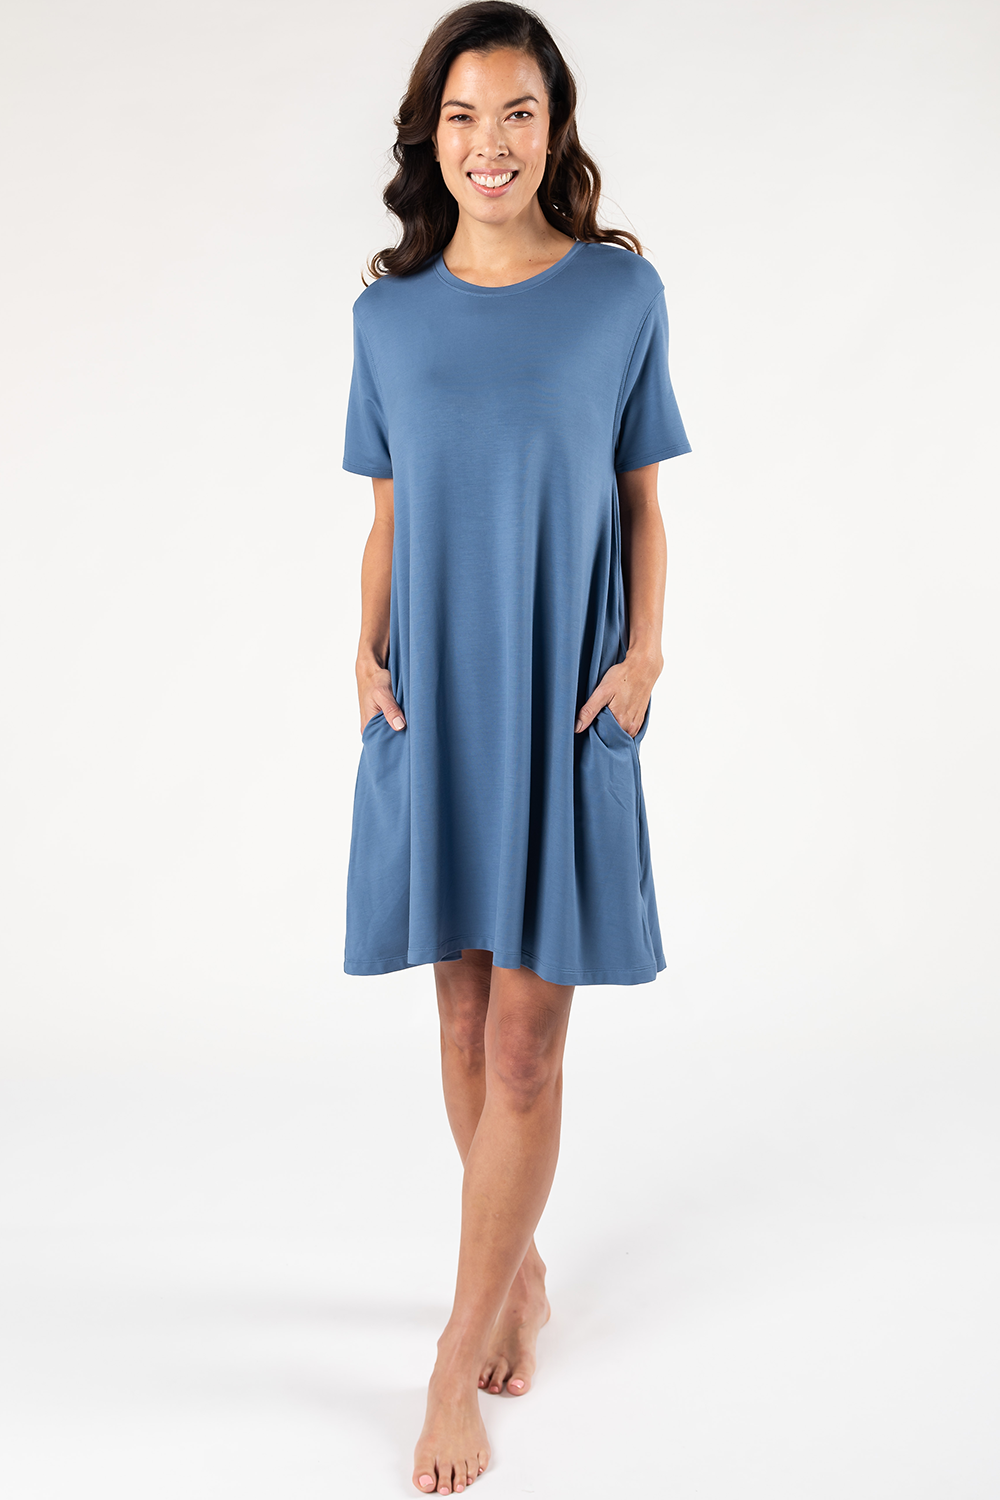 Jocelyn T-Shirt Dress - Coast Blue